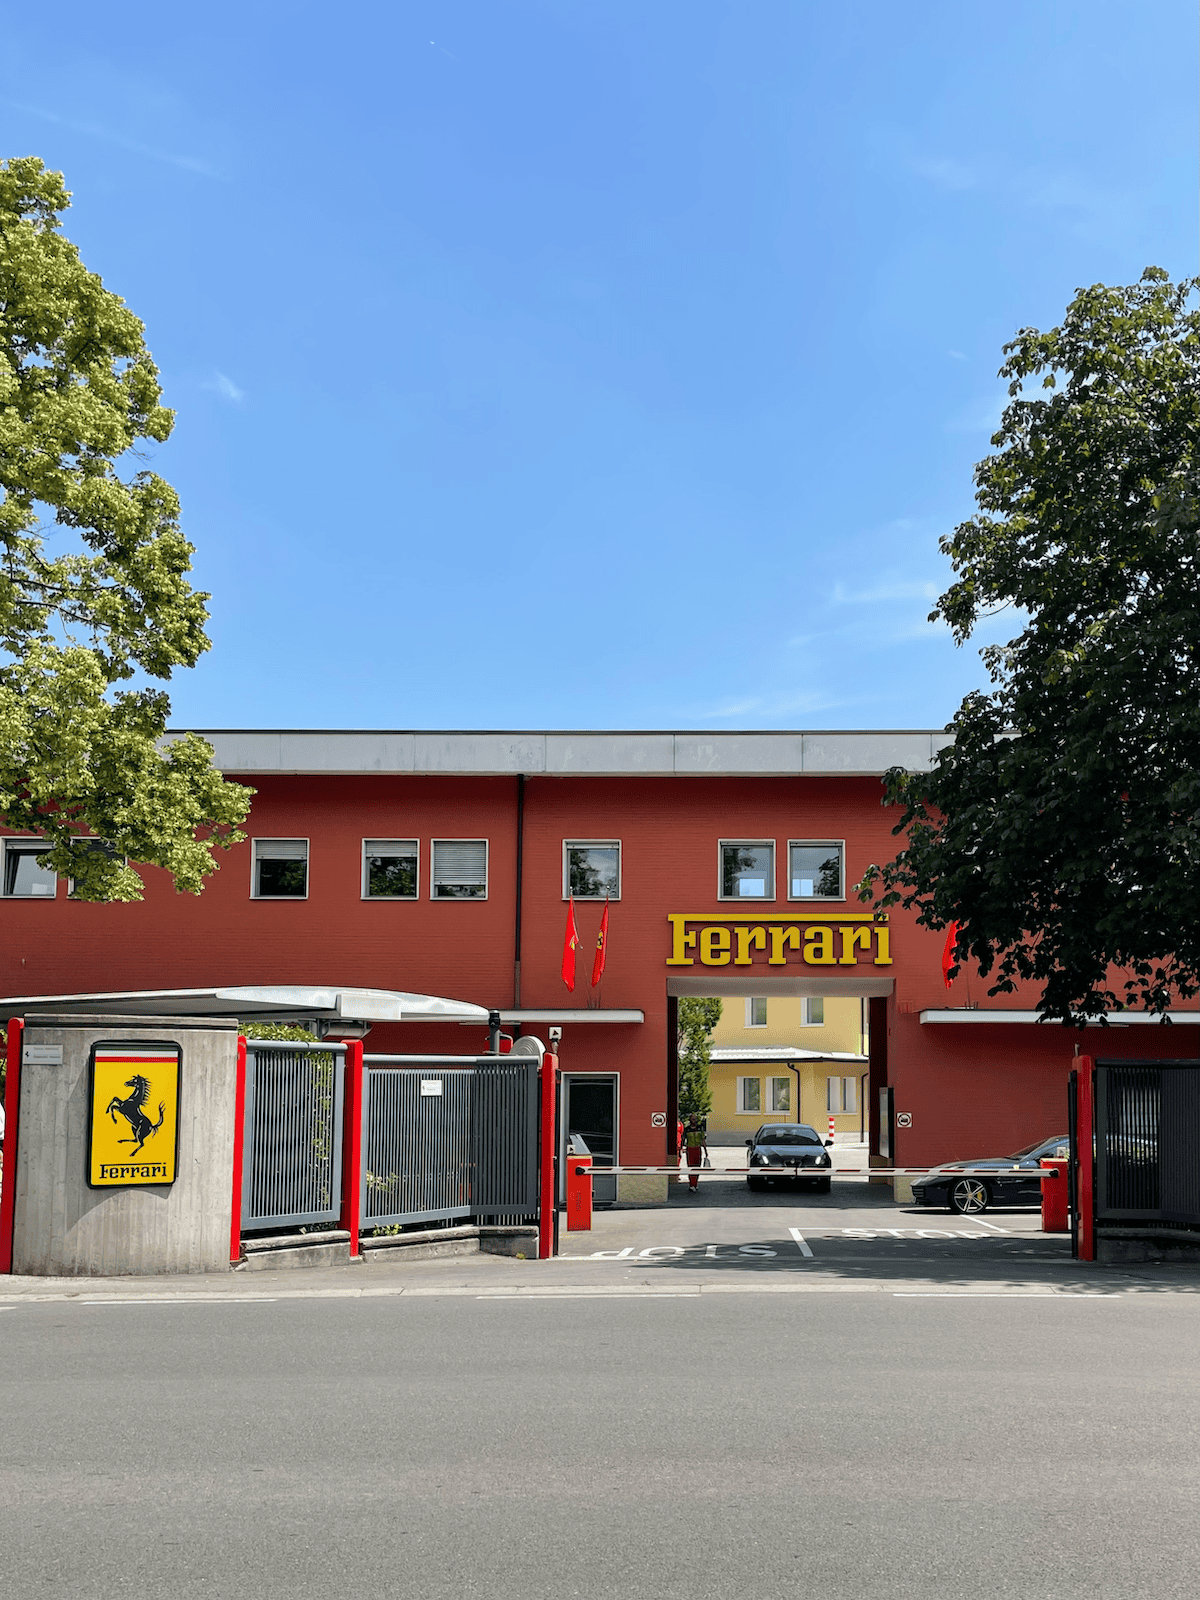 the historic Ferrari factory enterance